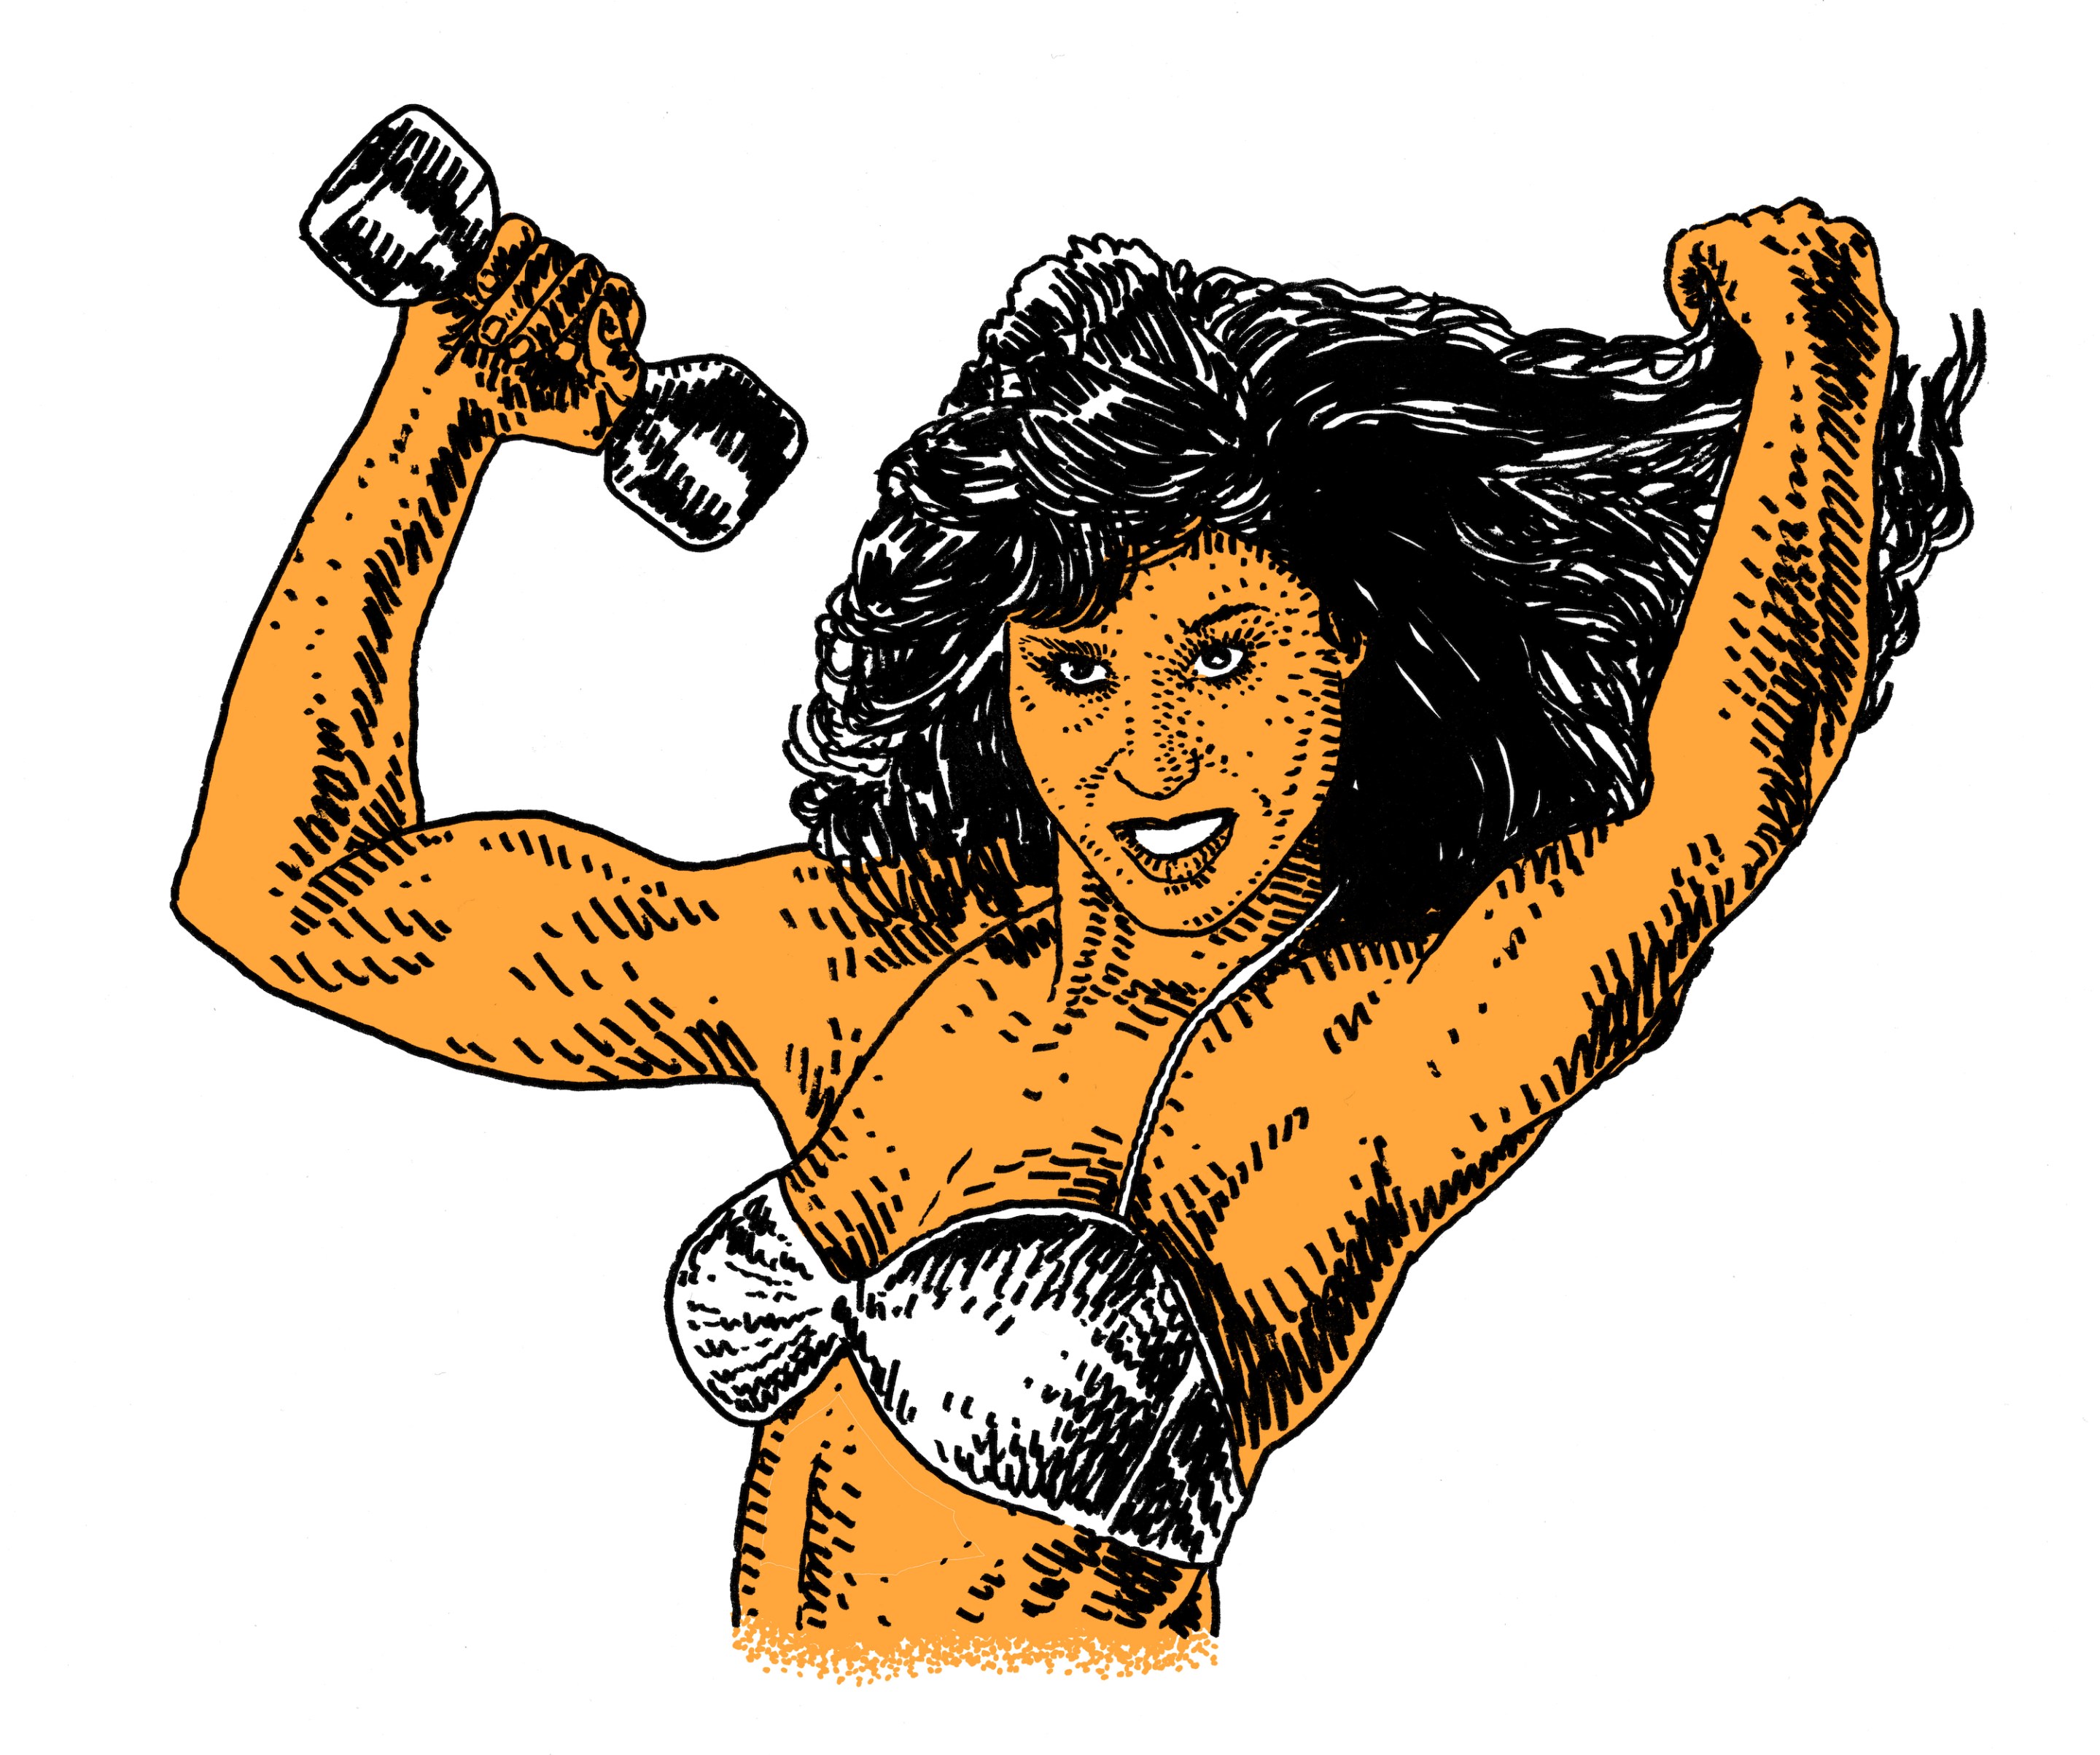 Bodybuilder Rachel McLish, as drawn by Adam Villacin.